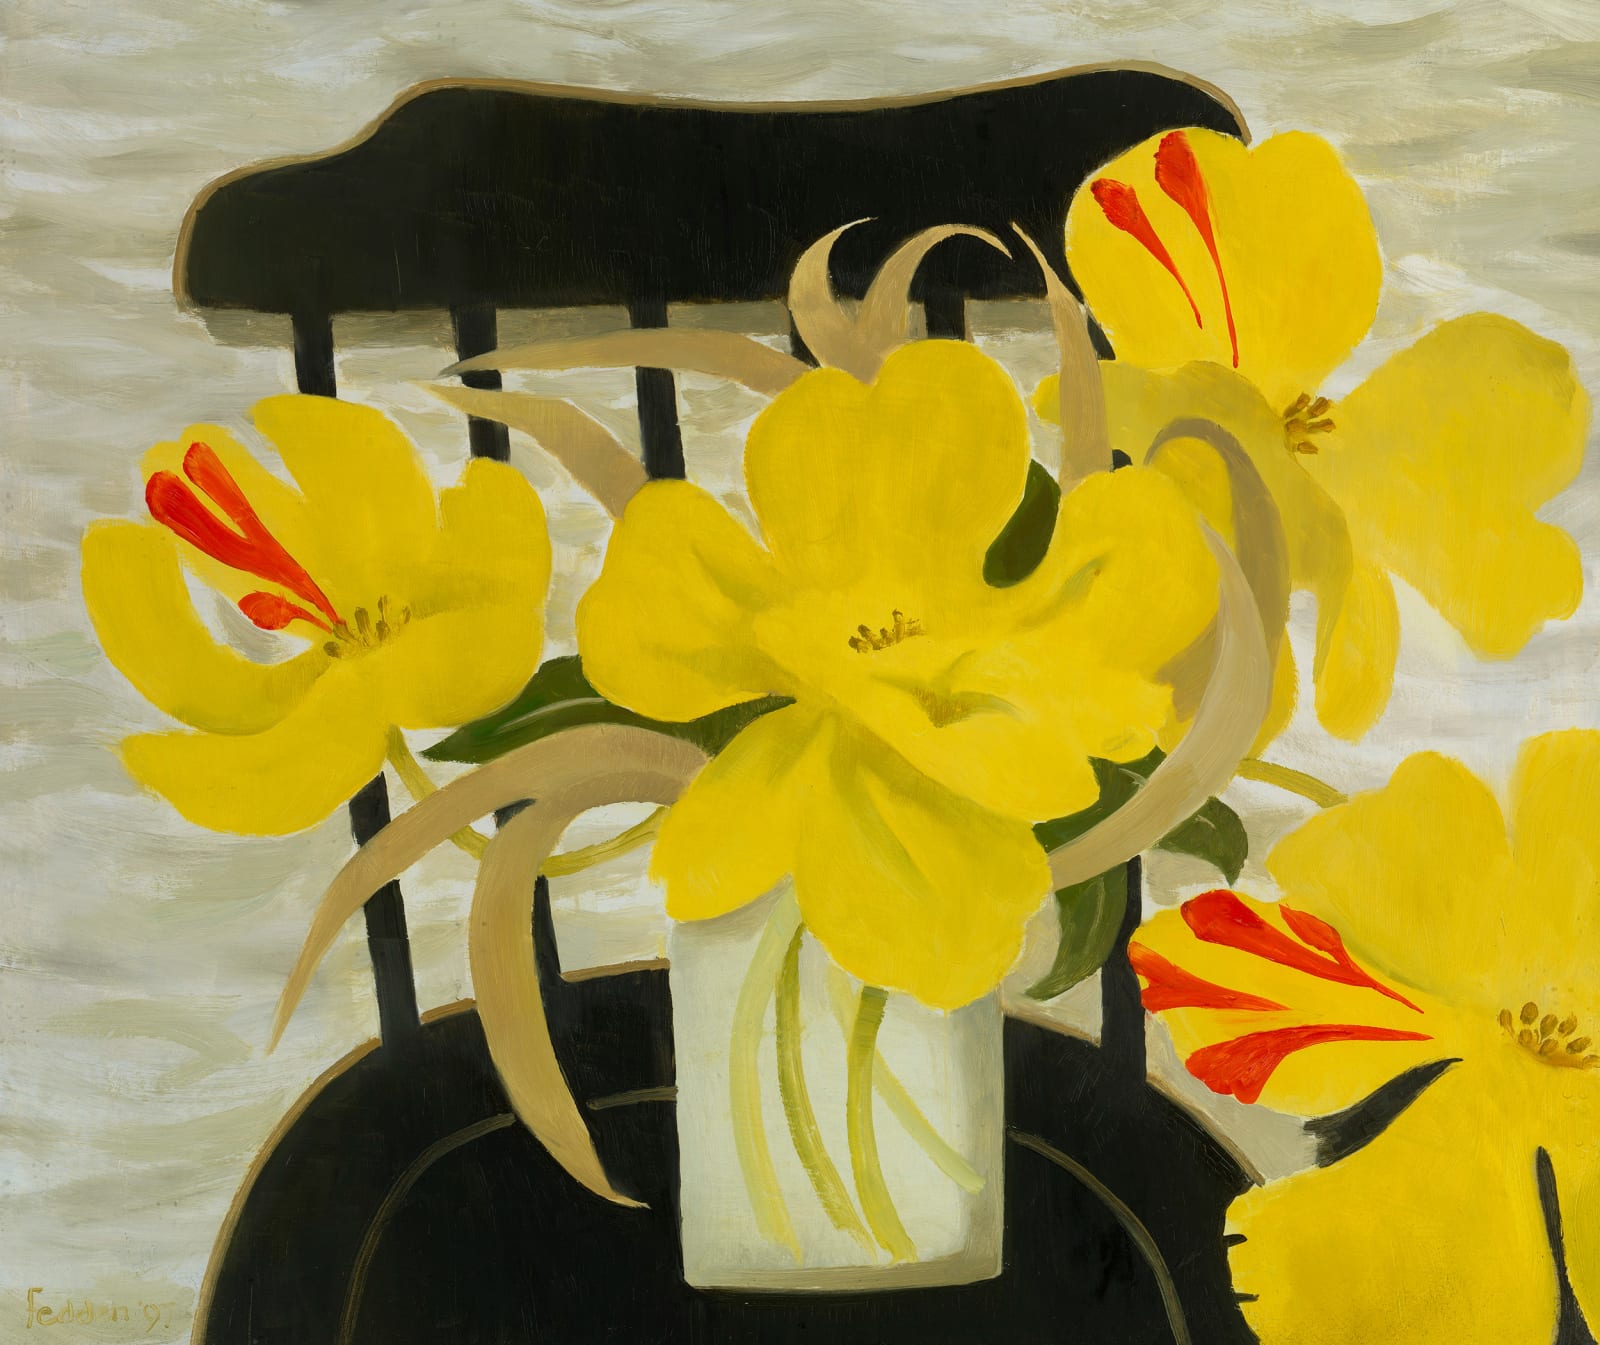 Mary Fedden, Yellow tulips, 1997